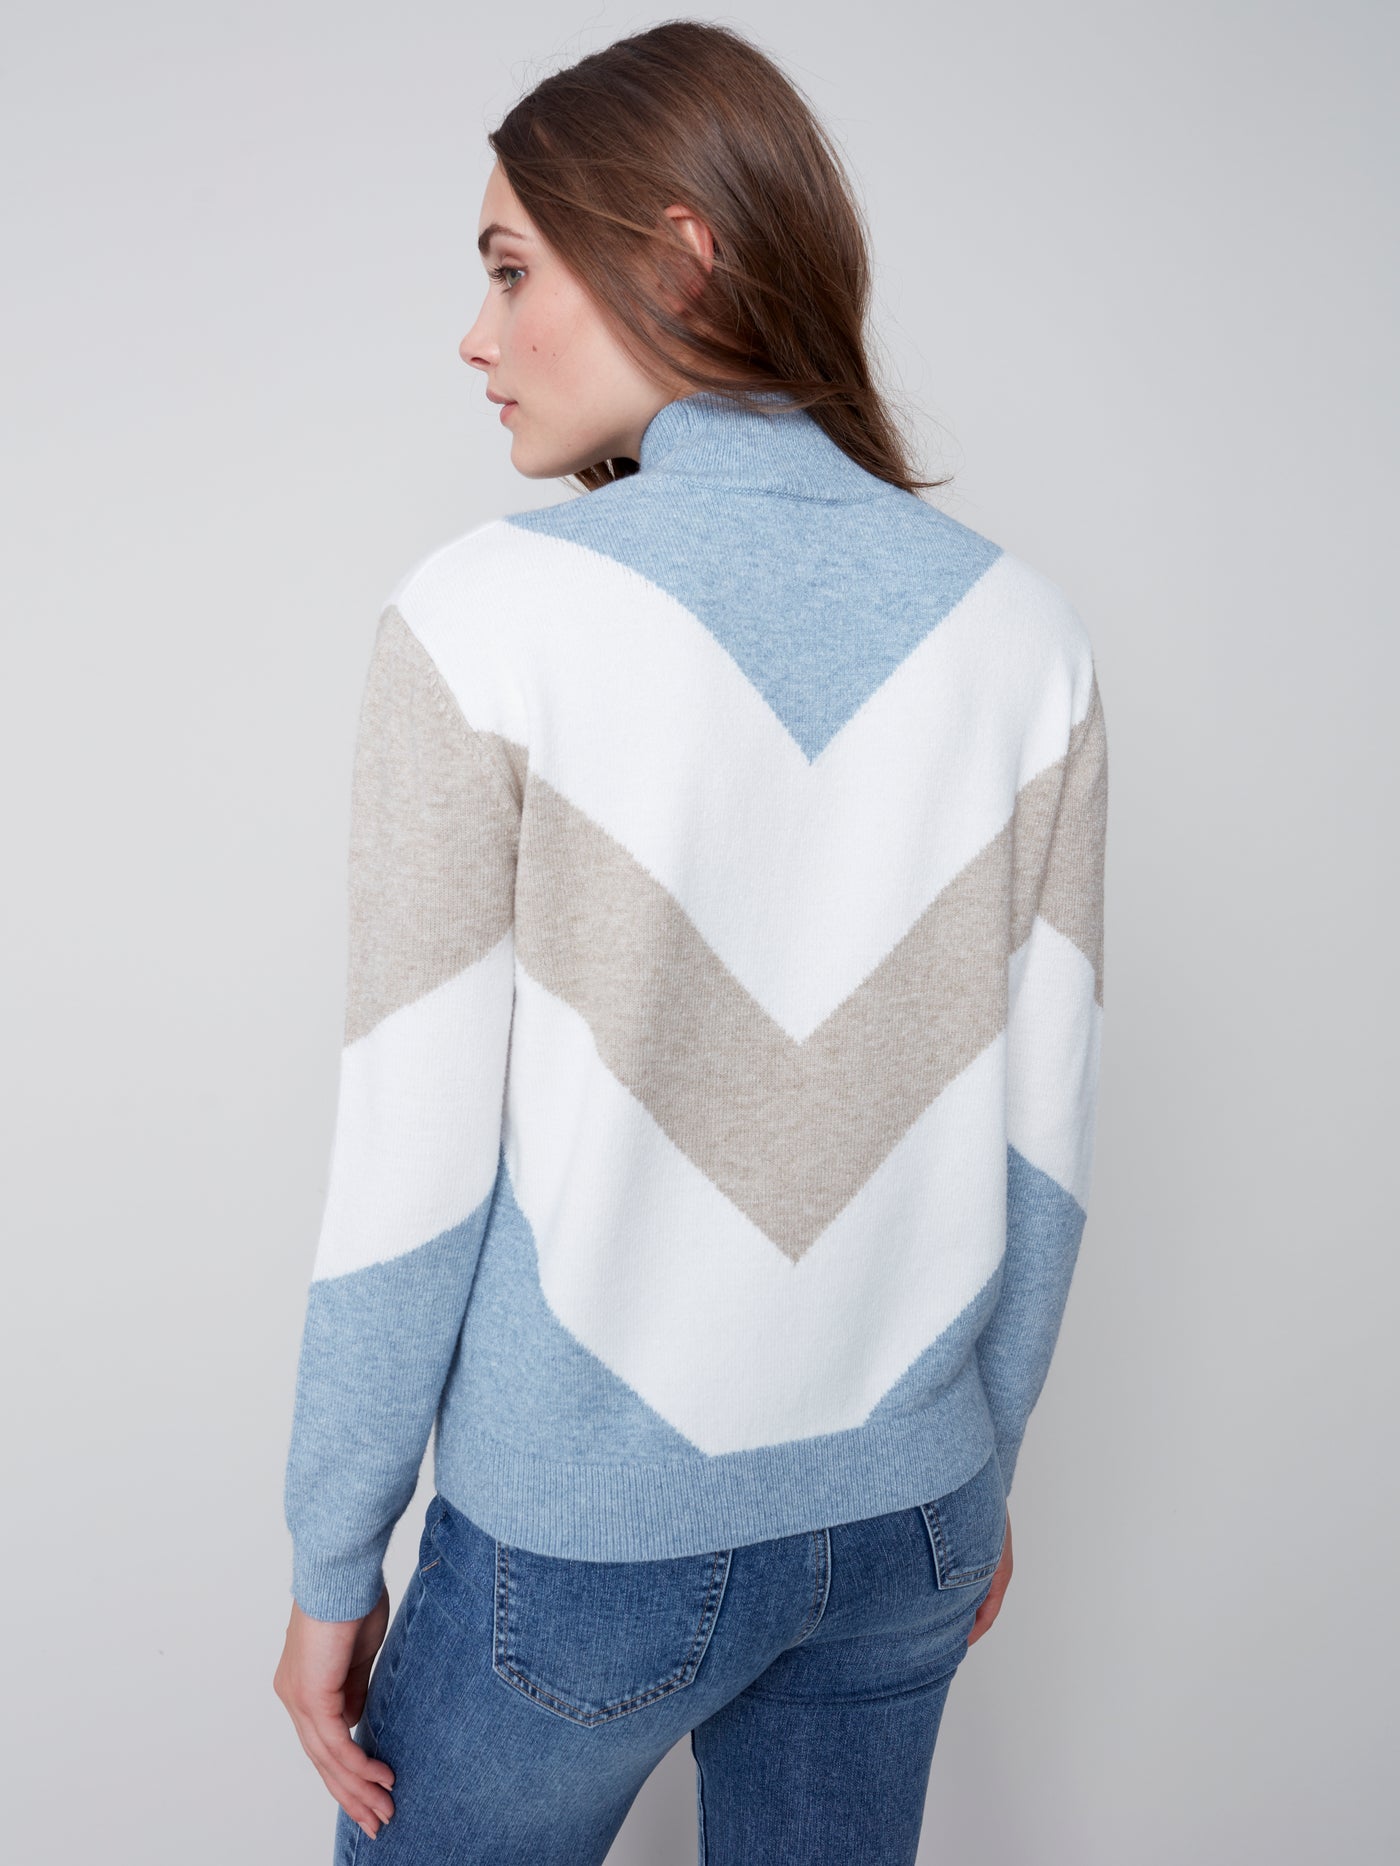 Charlie B Top - Chevron Sweater - White /Blue